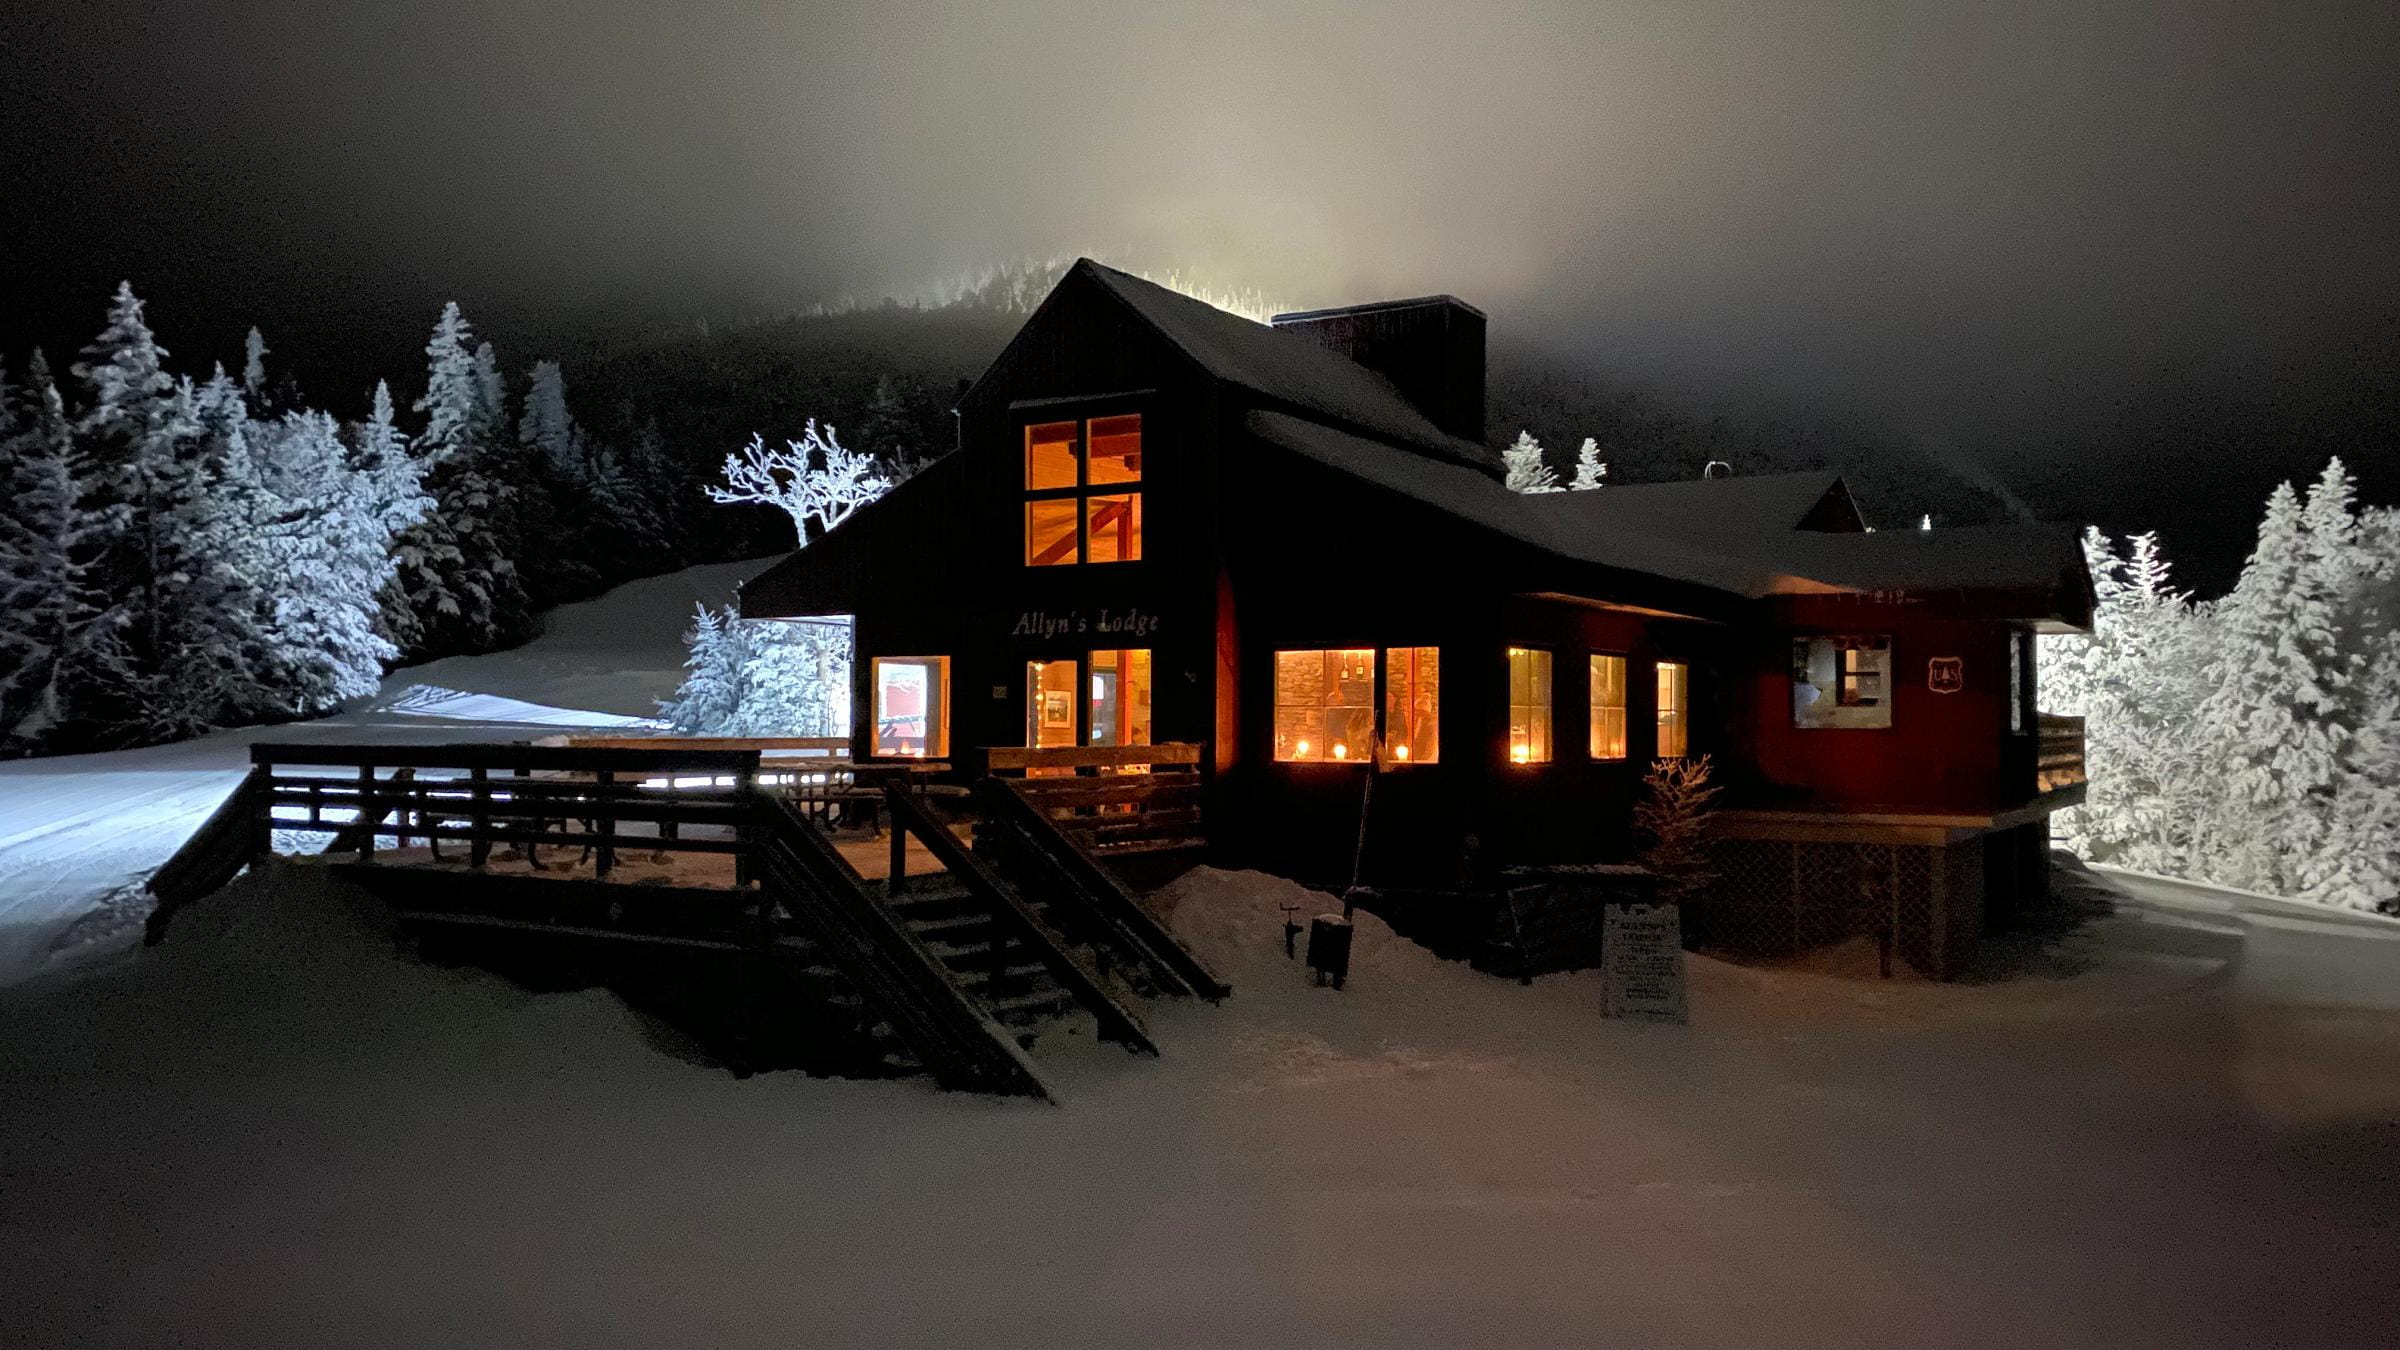 Allyn's Lodge at night